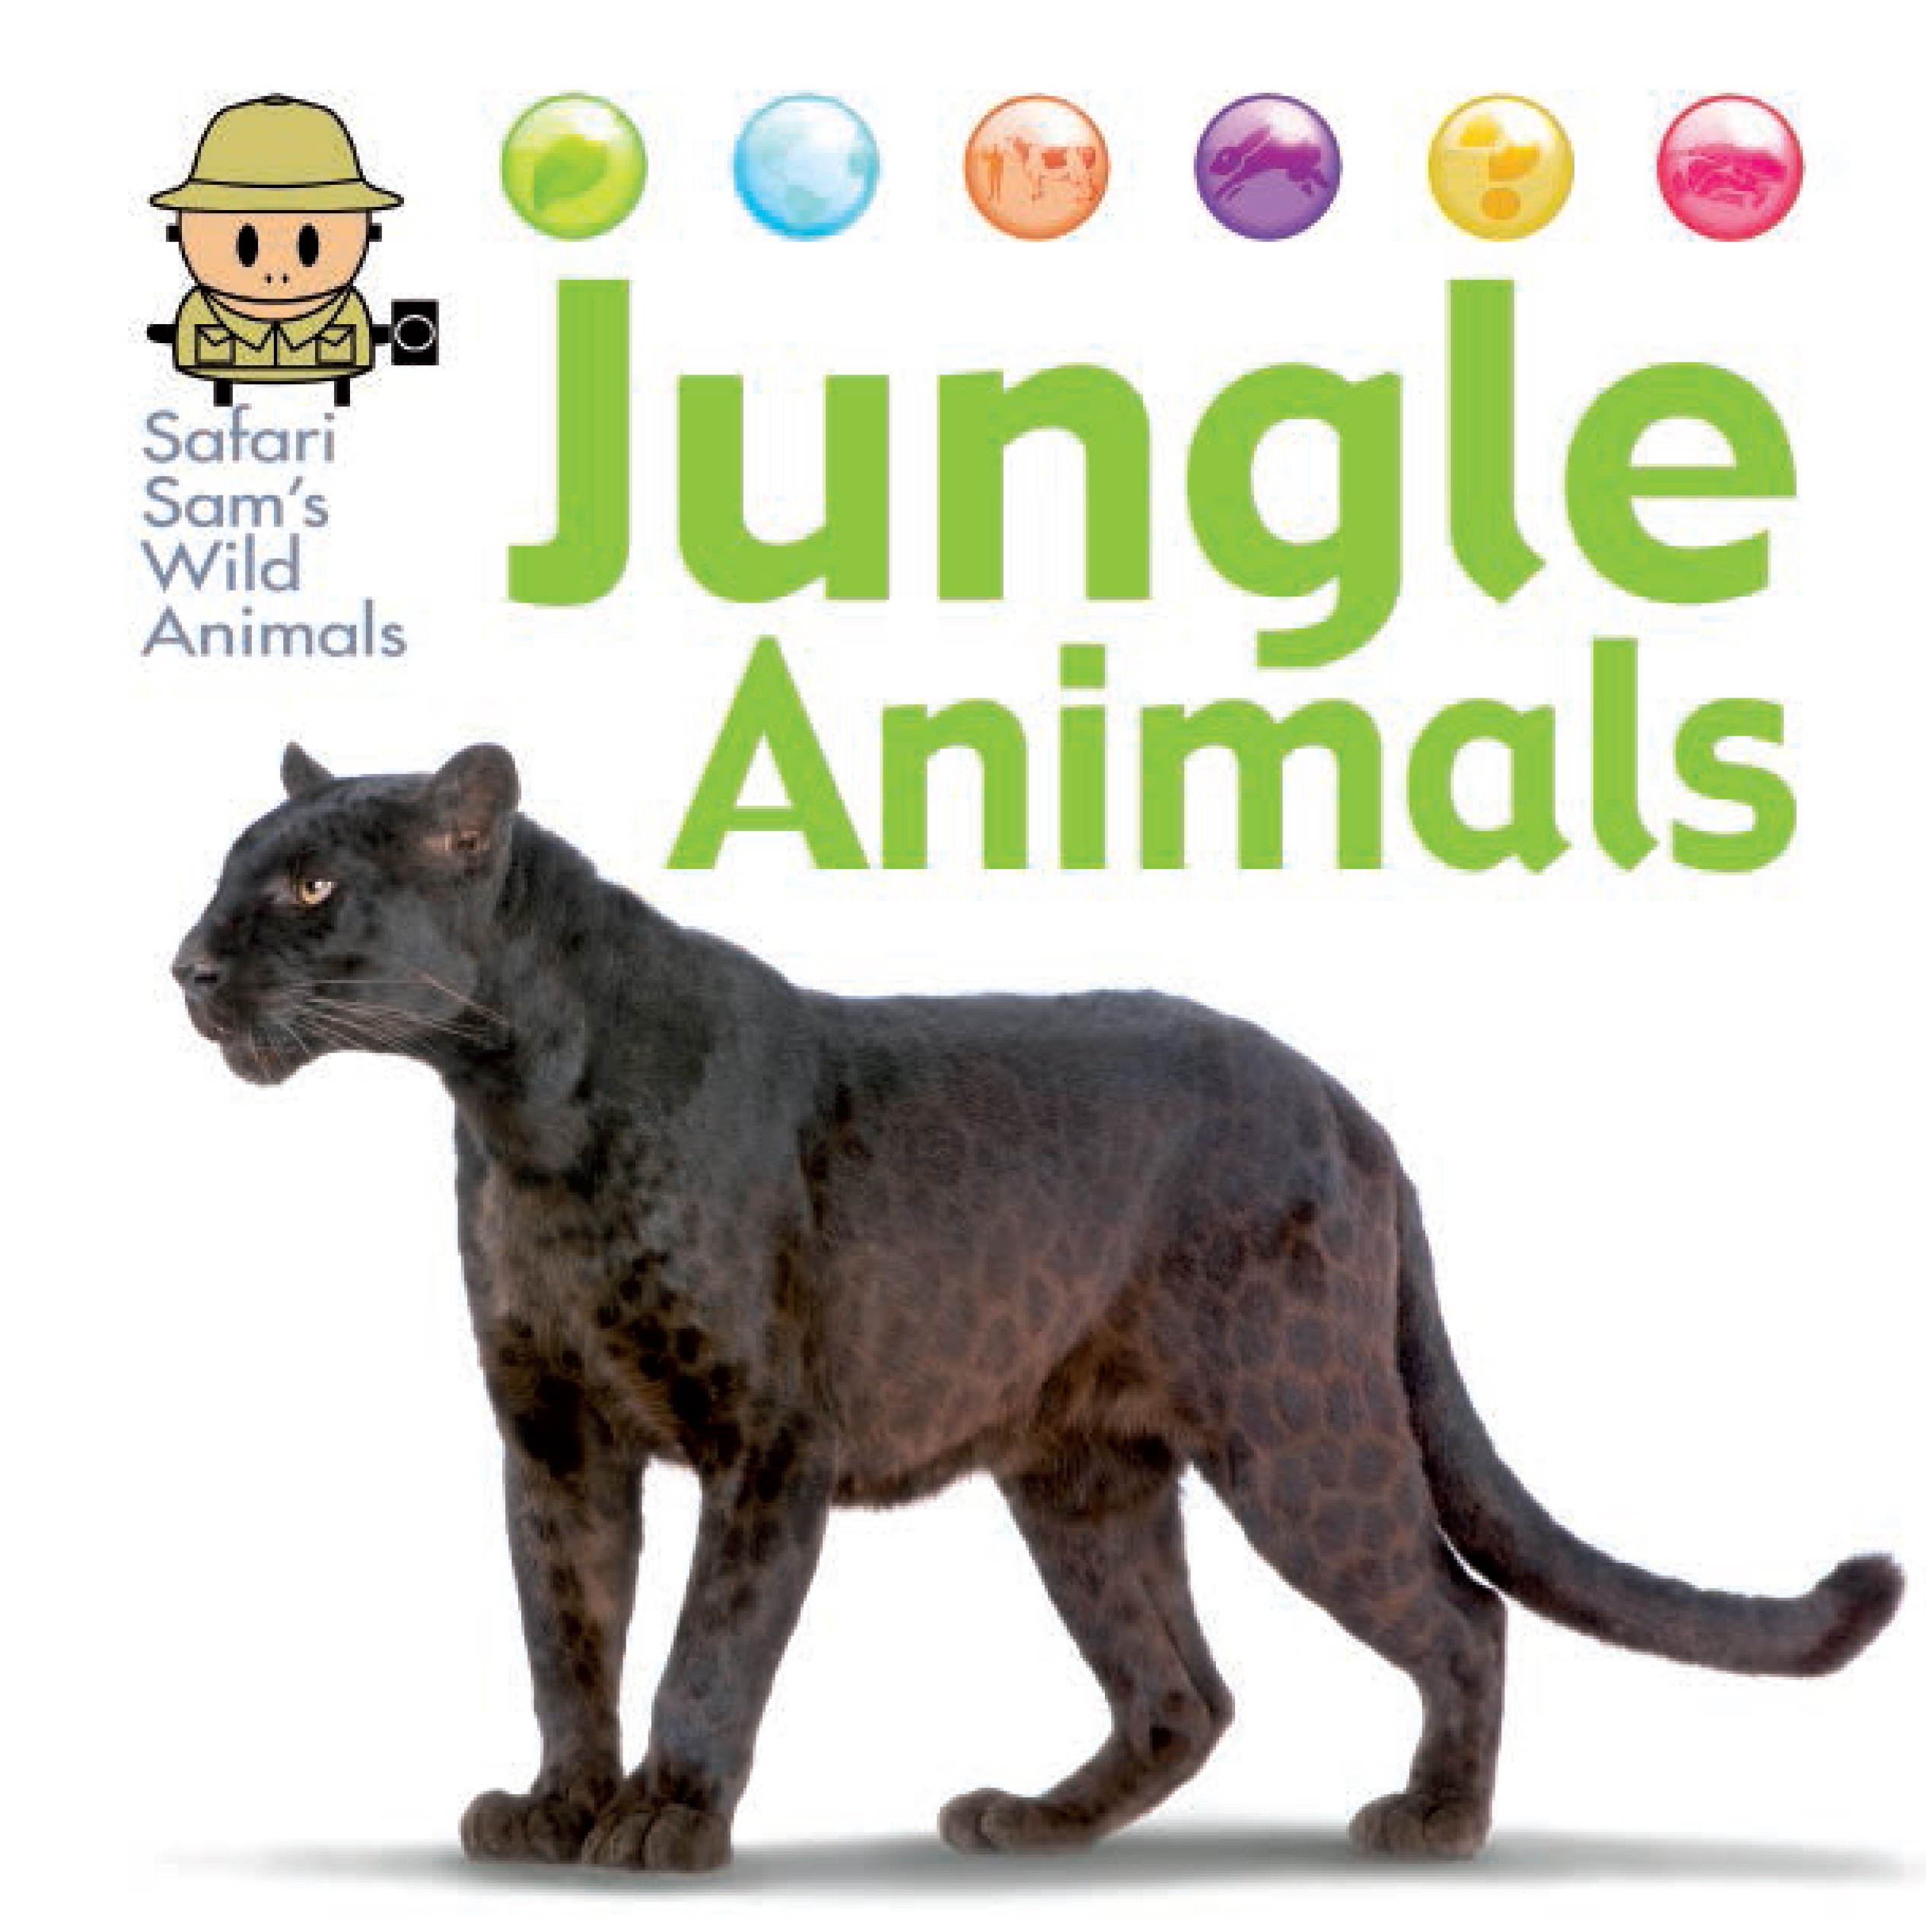 Safari Sam's Wild Animals: Jungle Animals by David West | Hachette UK